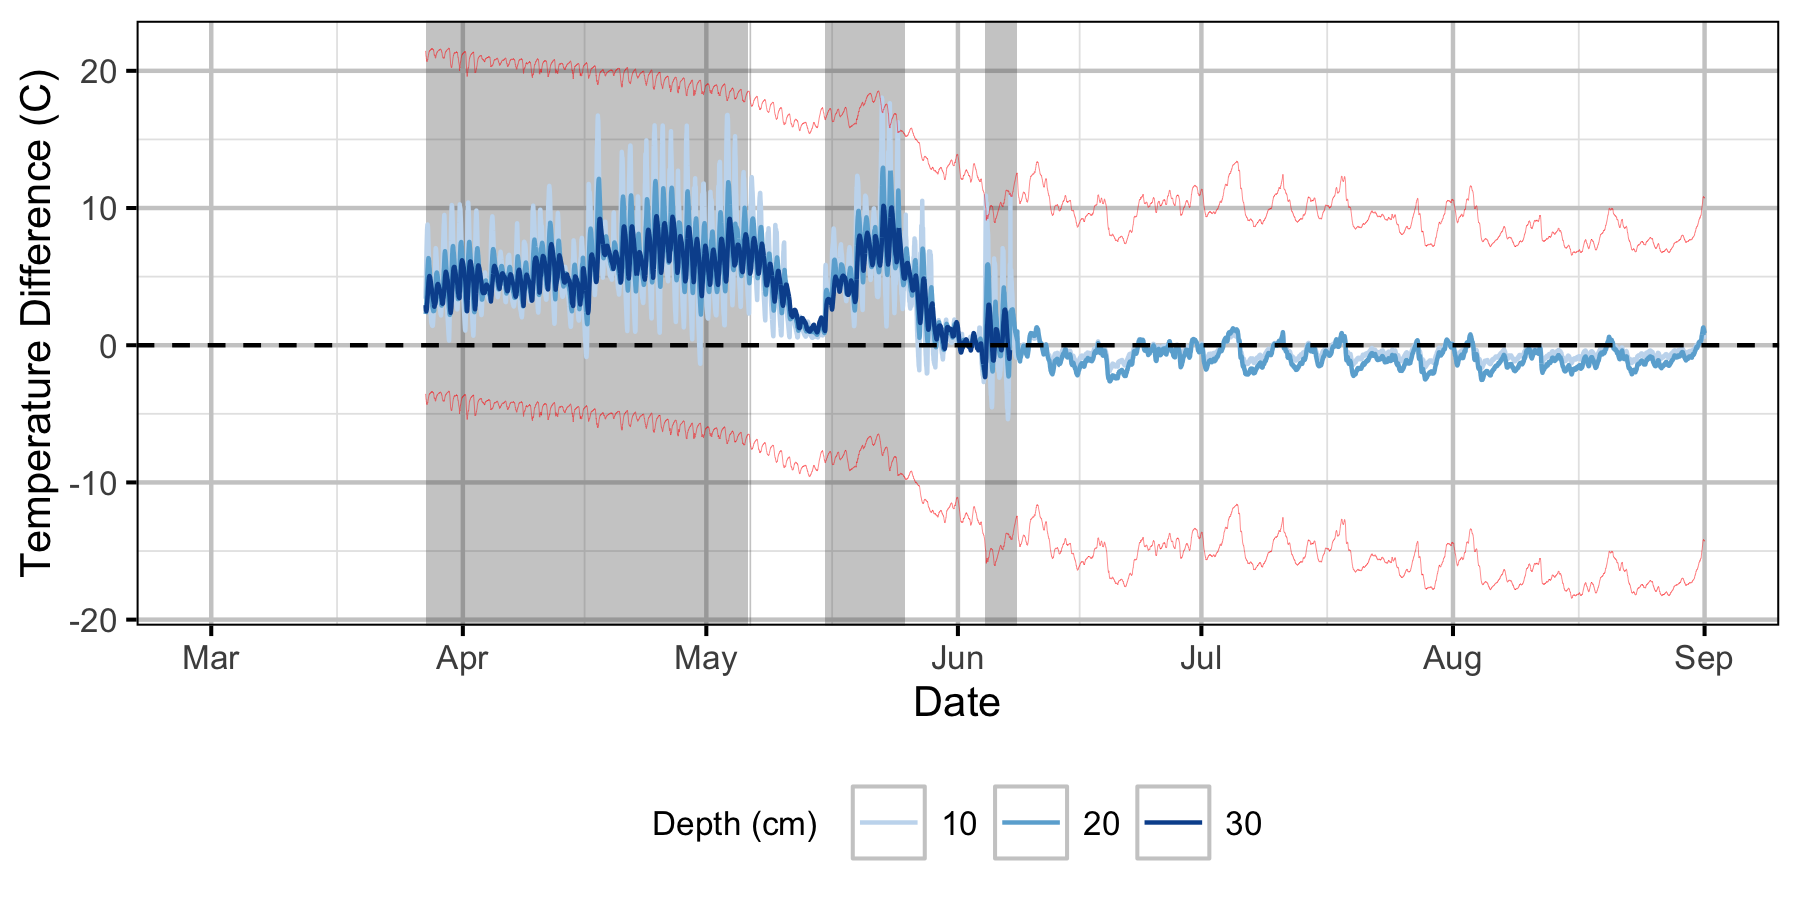 figures/Sensor Data/Relative Gravel Temperature Stations/Norns Creek Fan/Station07.png